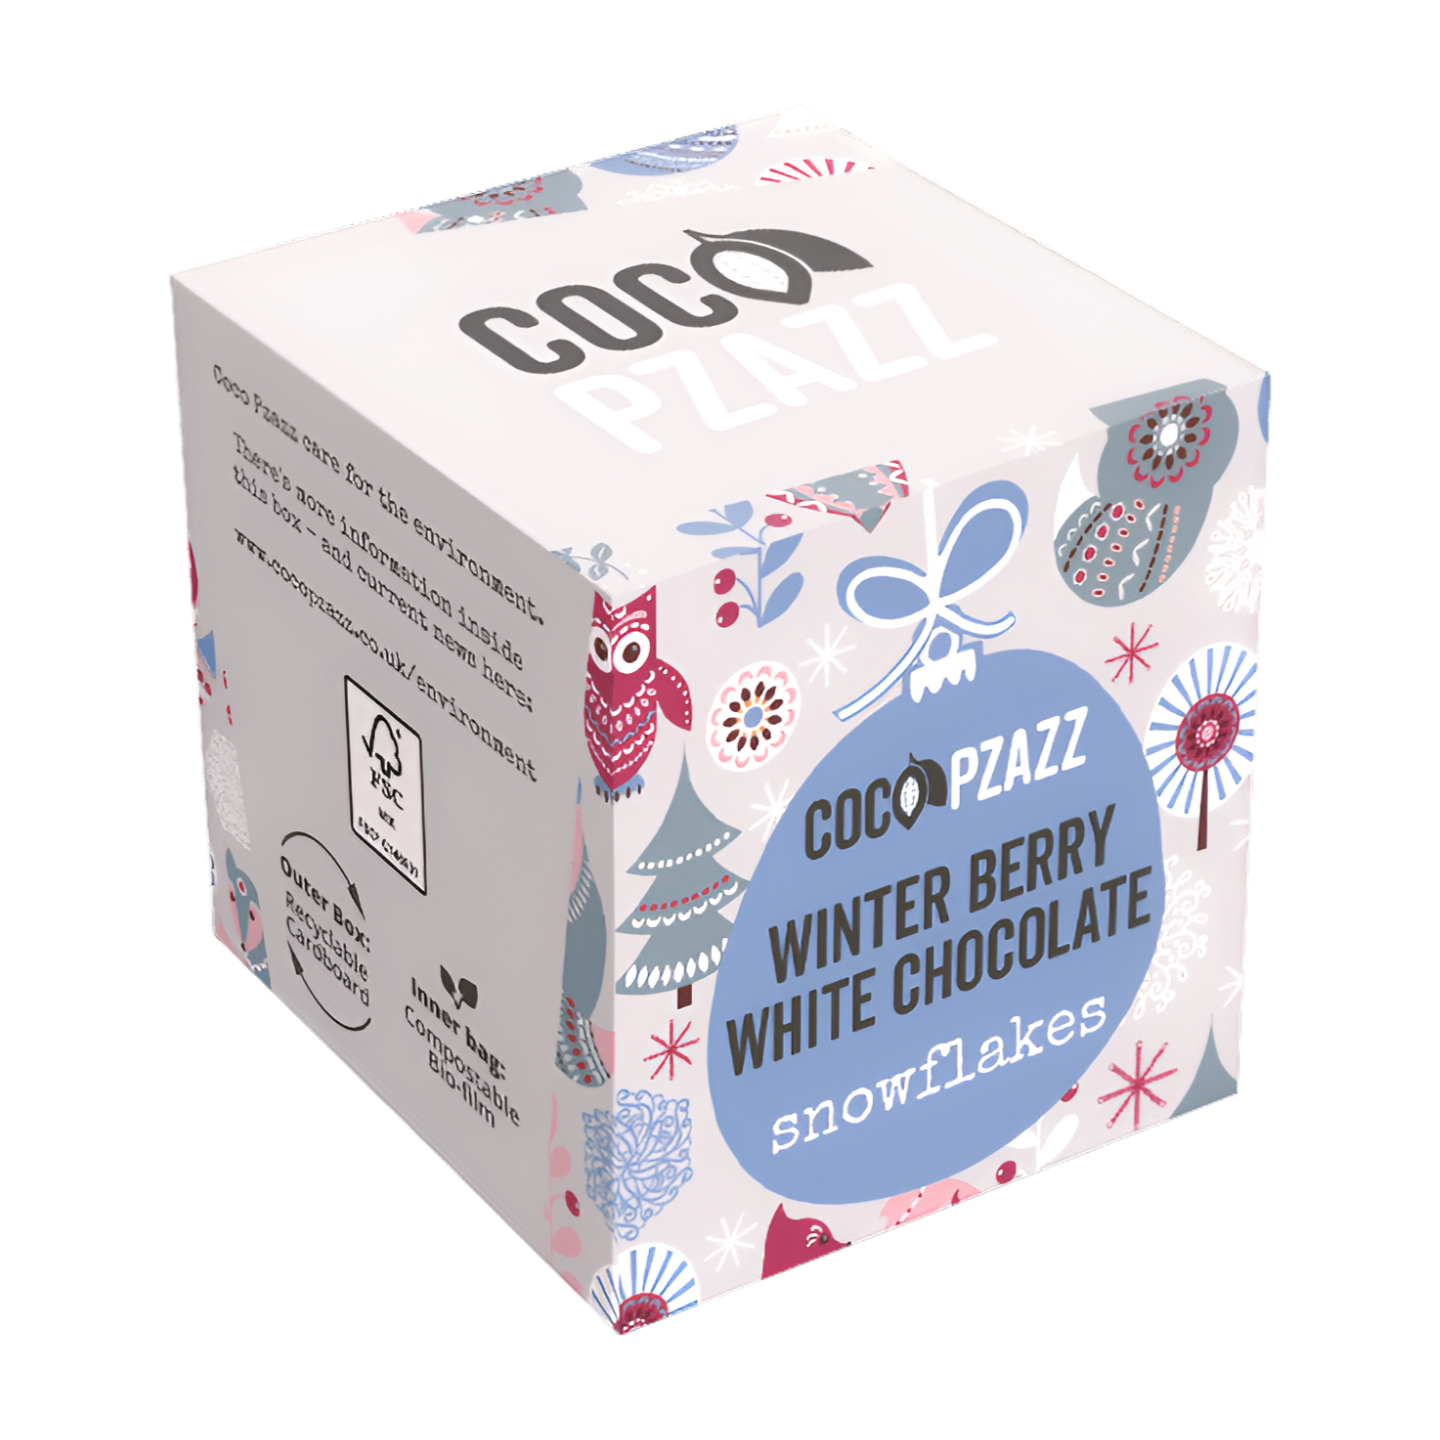 Coco Pzazz Winter Berry White Chocolate Snowflakes (80g)